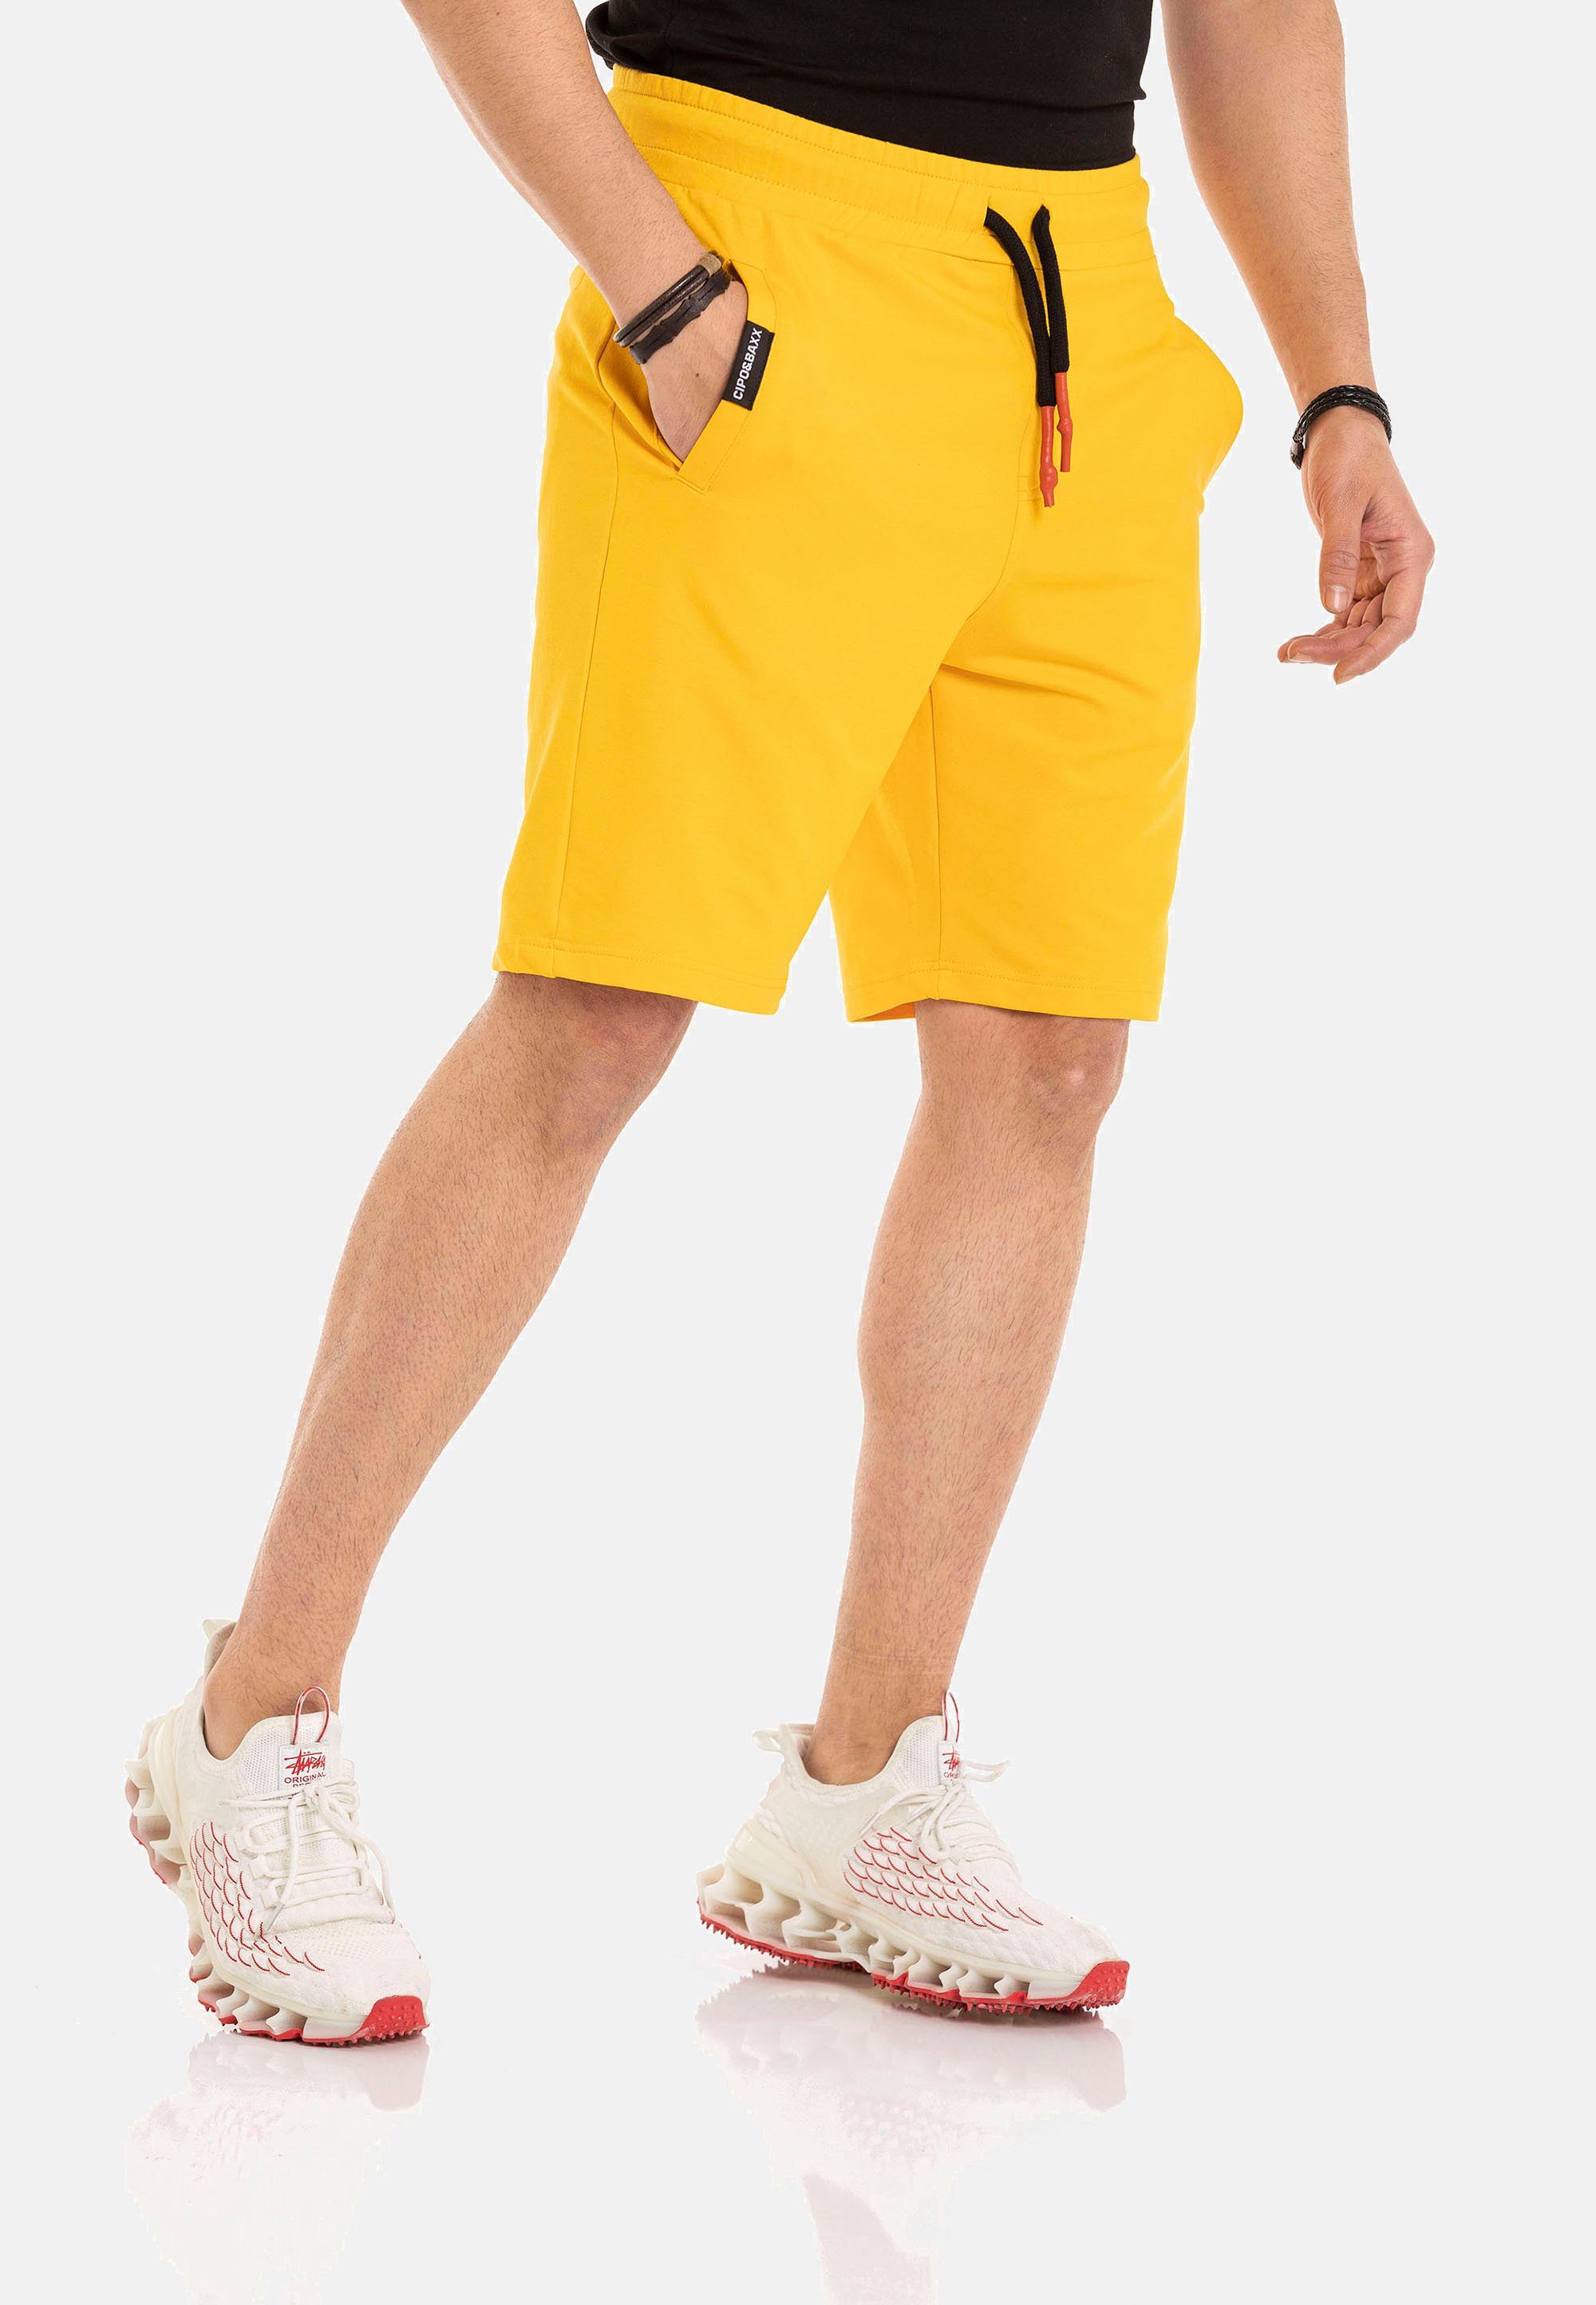 Shorts in sportlichem gelb Look Baxx & Cipo